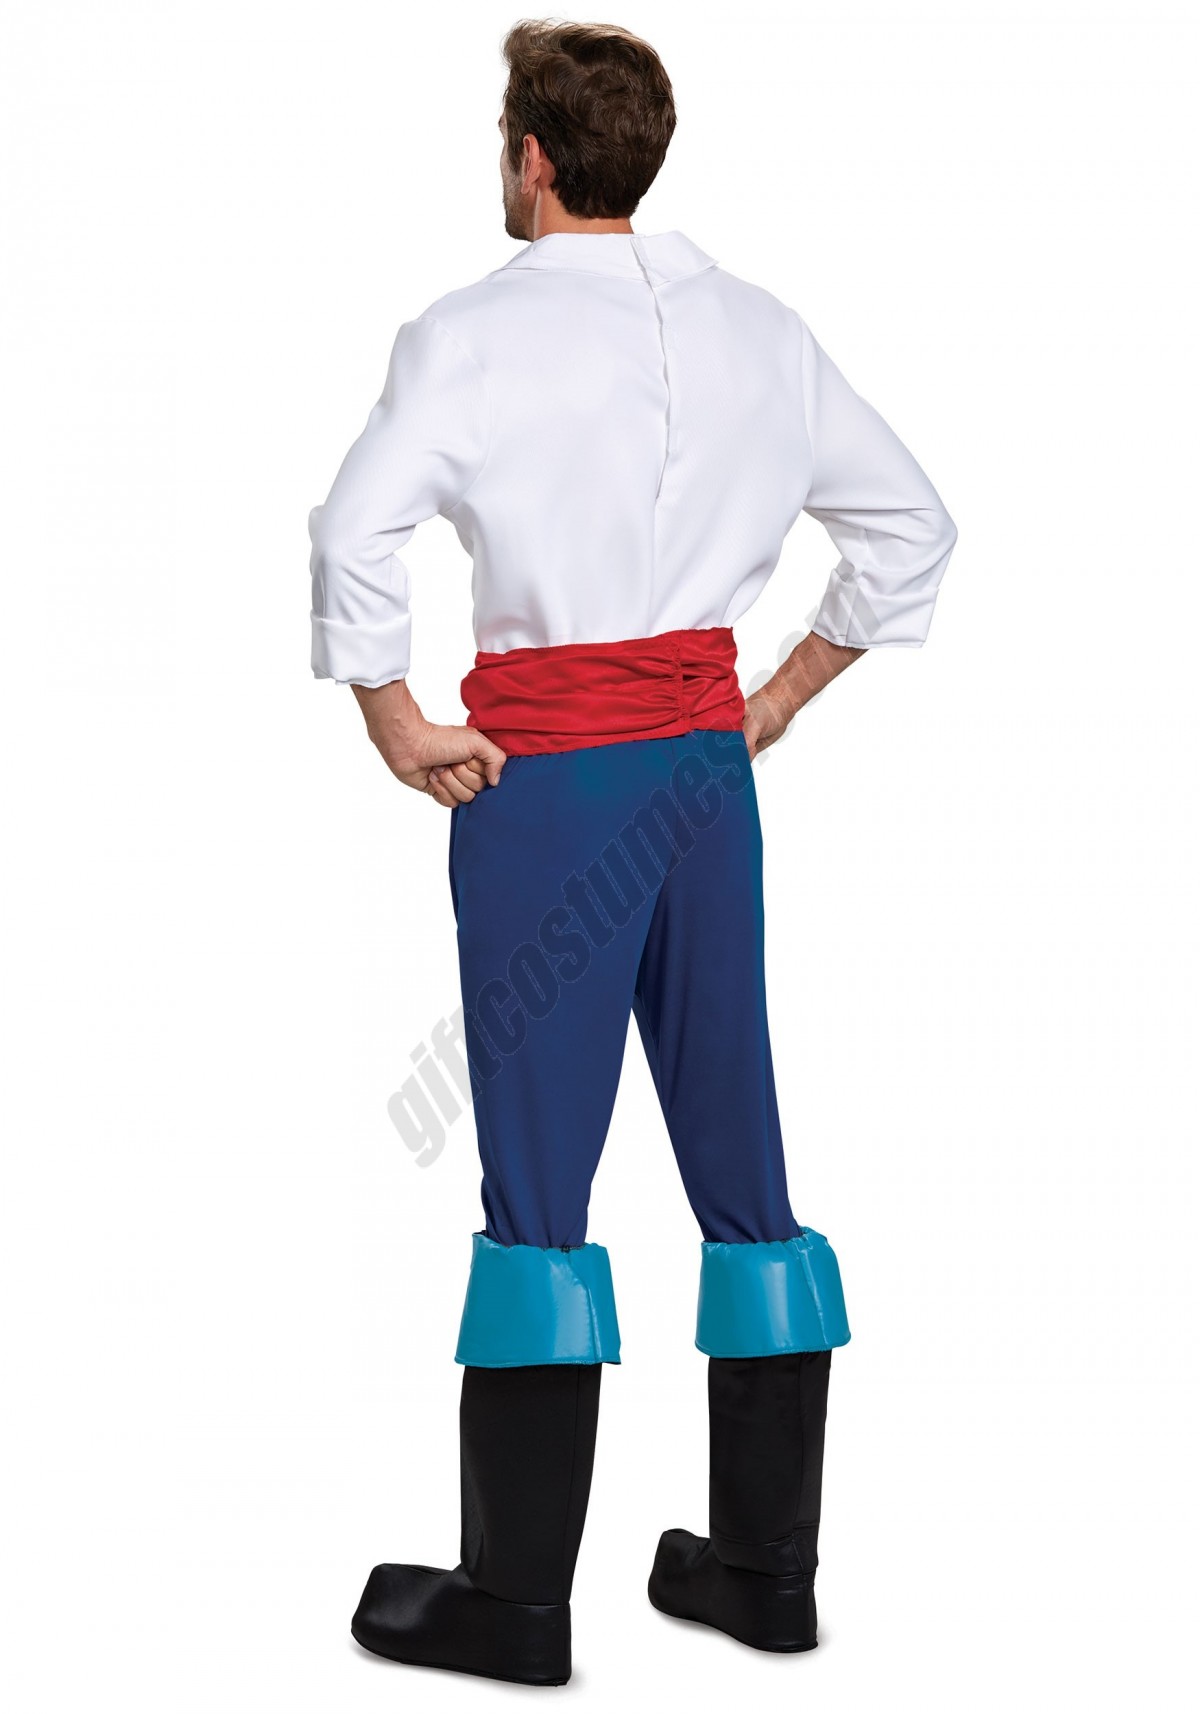 Disney Prince Eric Deluxe Mens Costume - Men's - -1